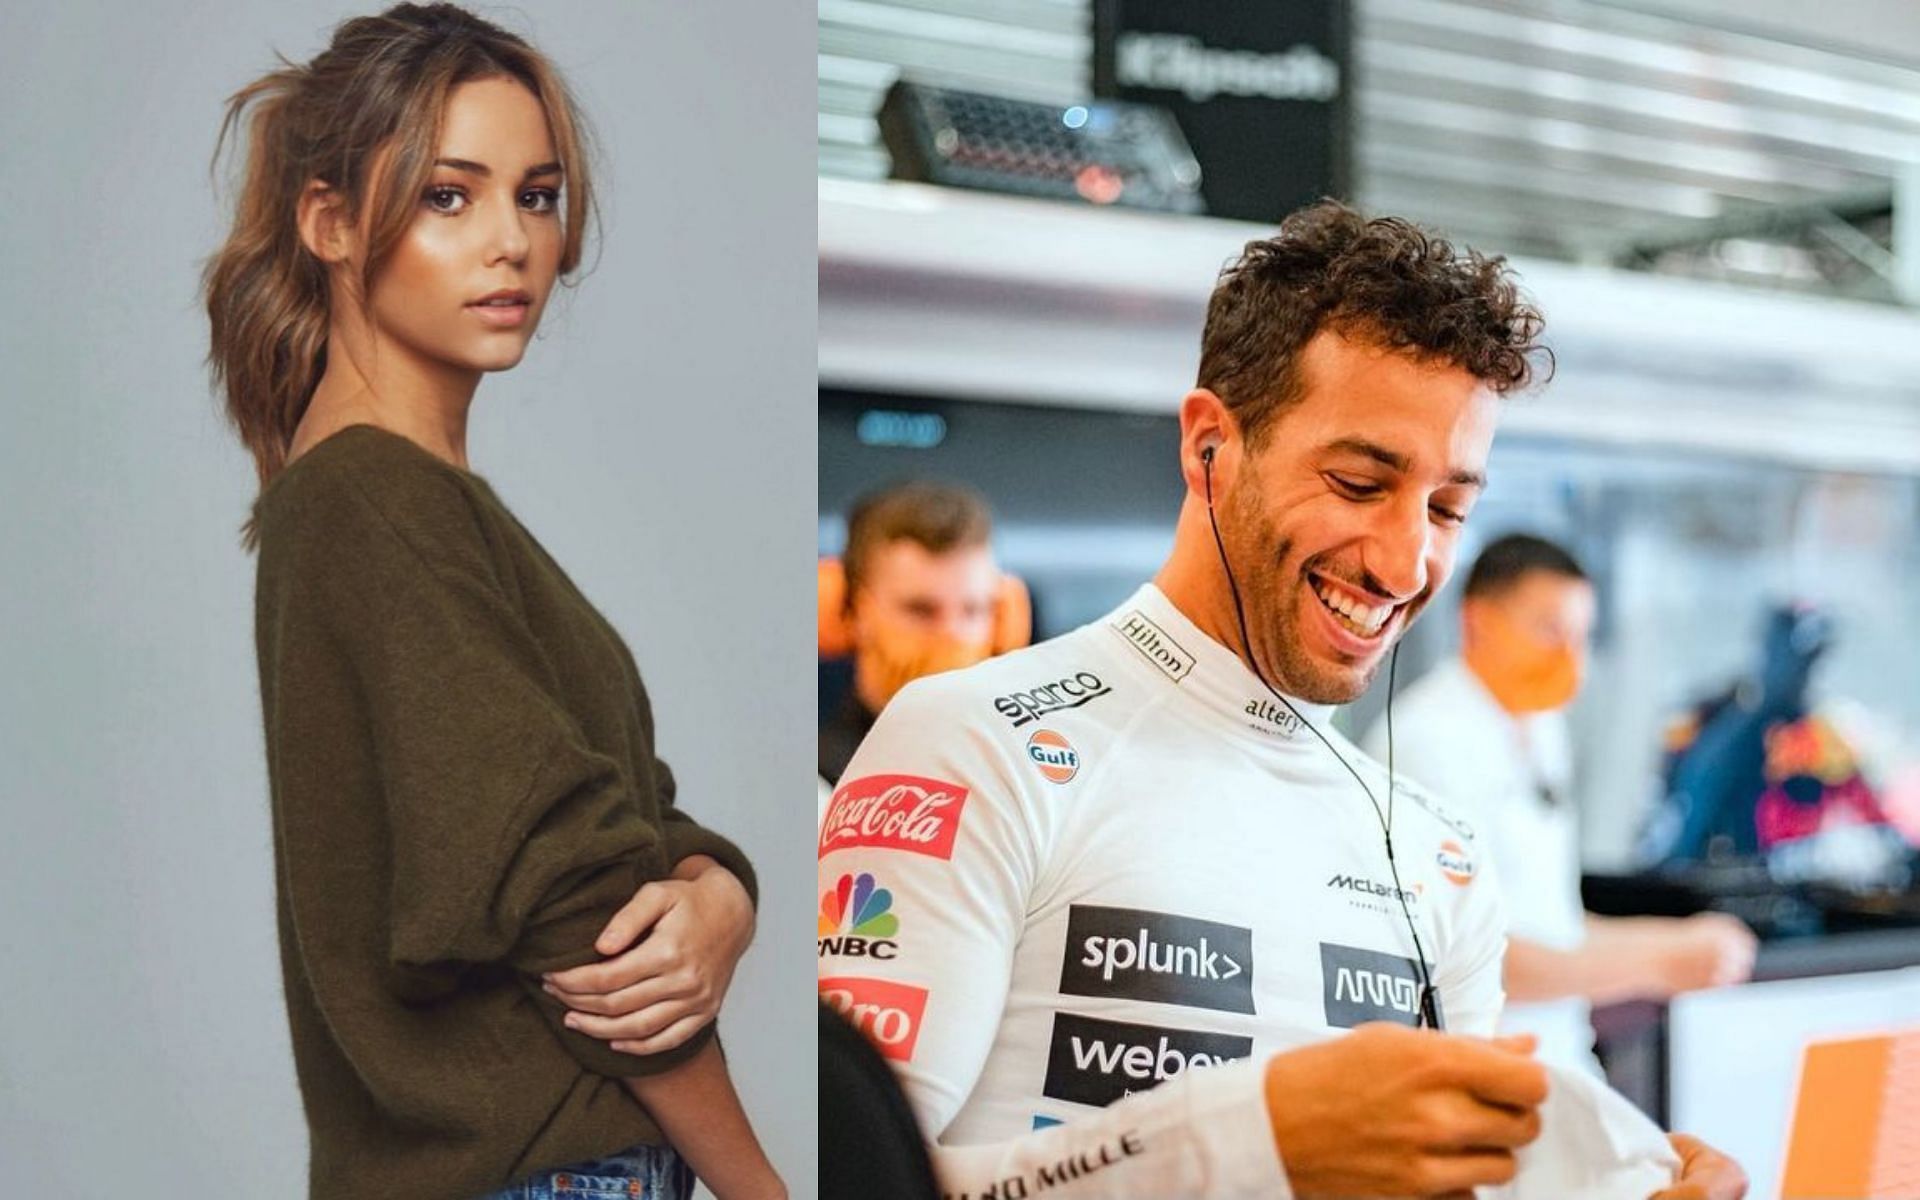 Daniel Ricciardo rumored to be dating daughter of former F1 driver